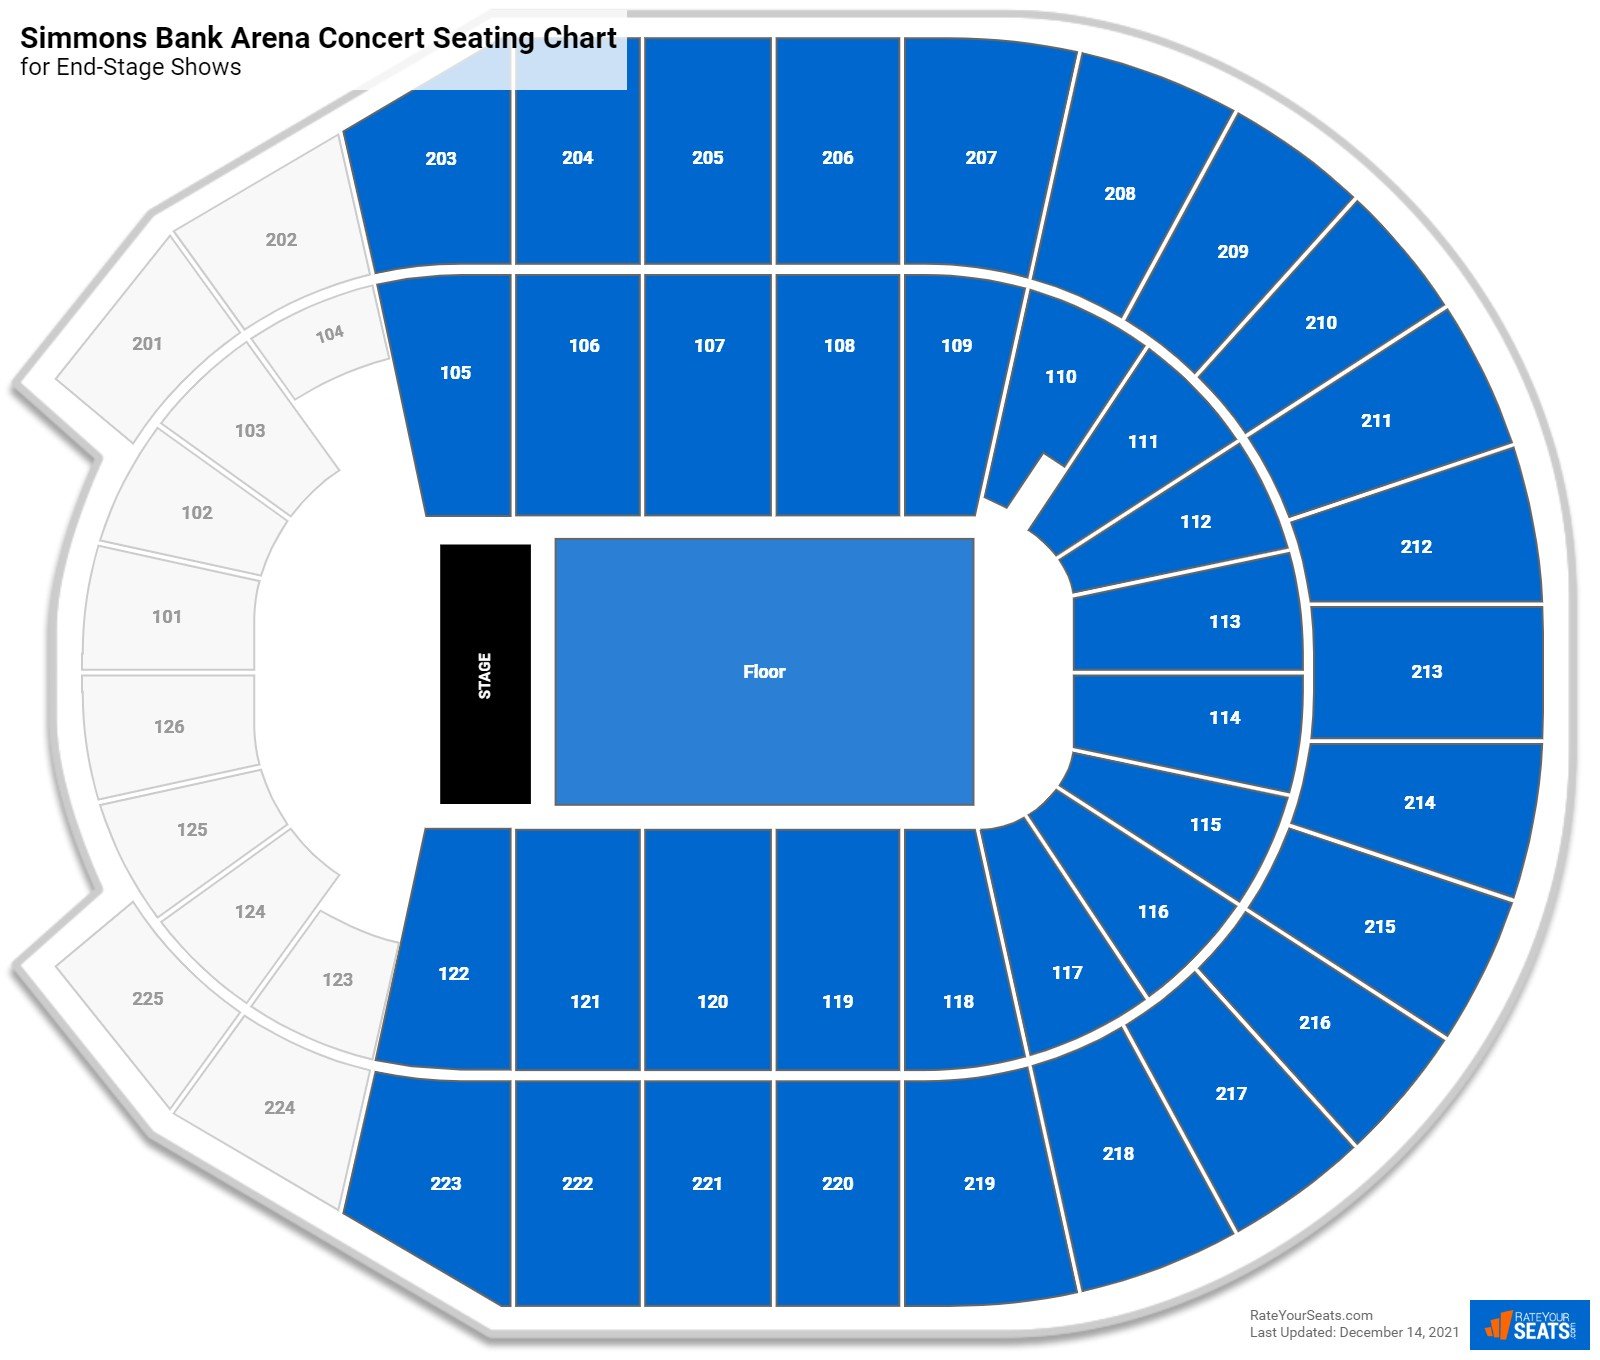 Simmons Bank Arena Concert Seating Chart